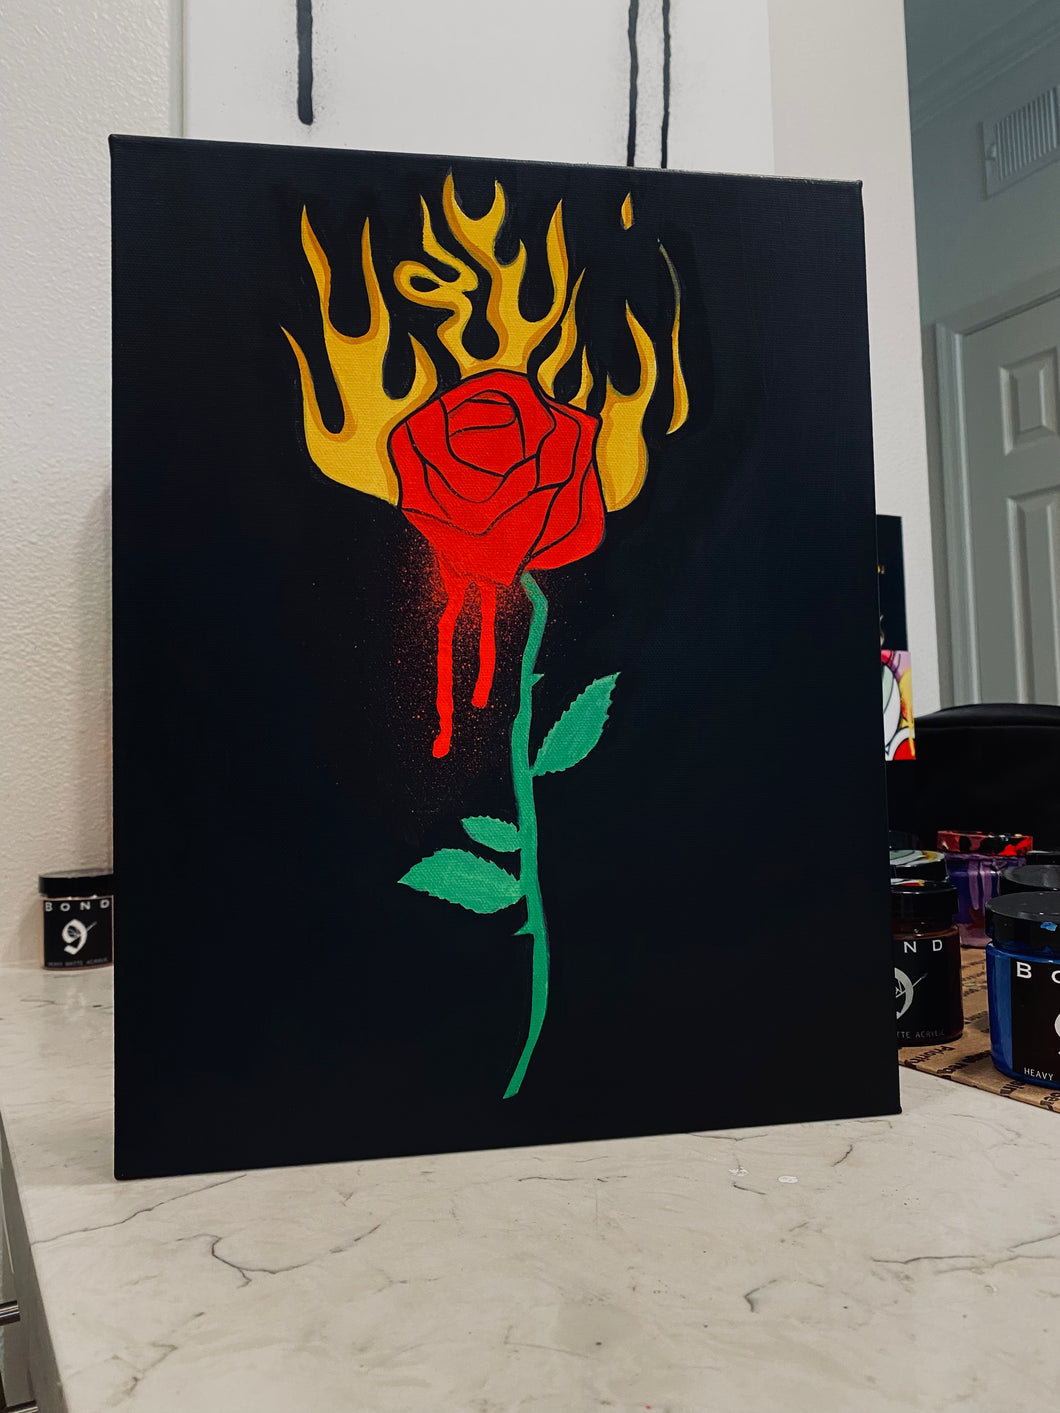 SV rose flame